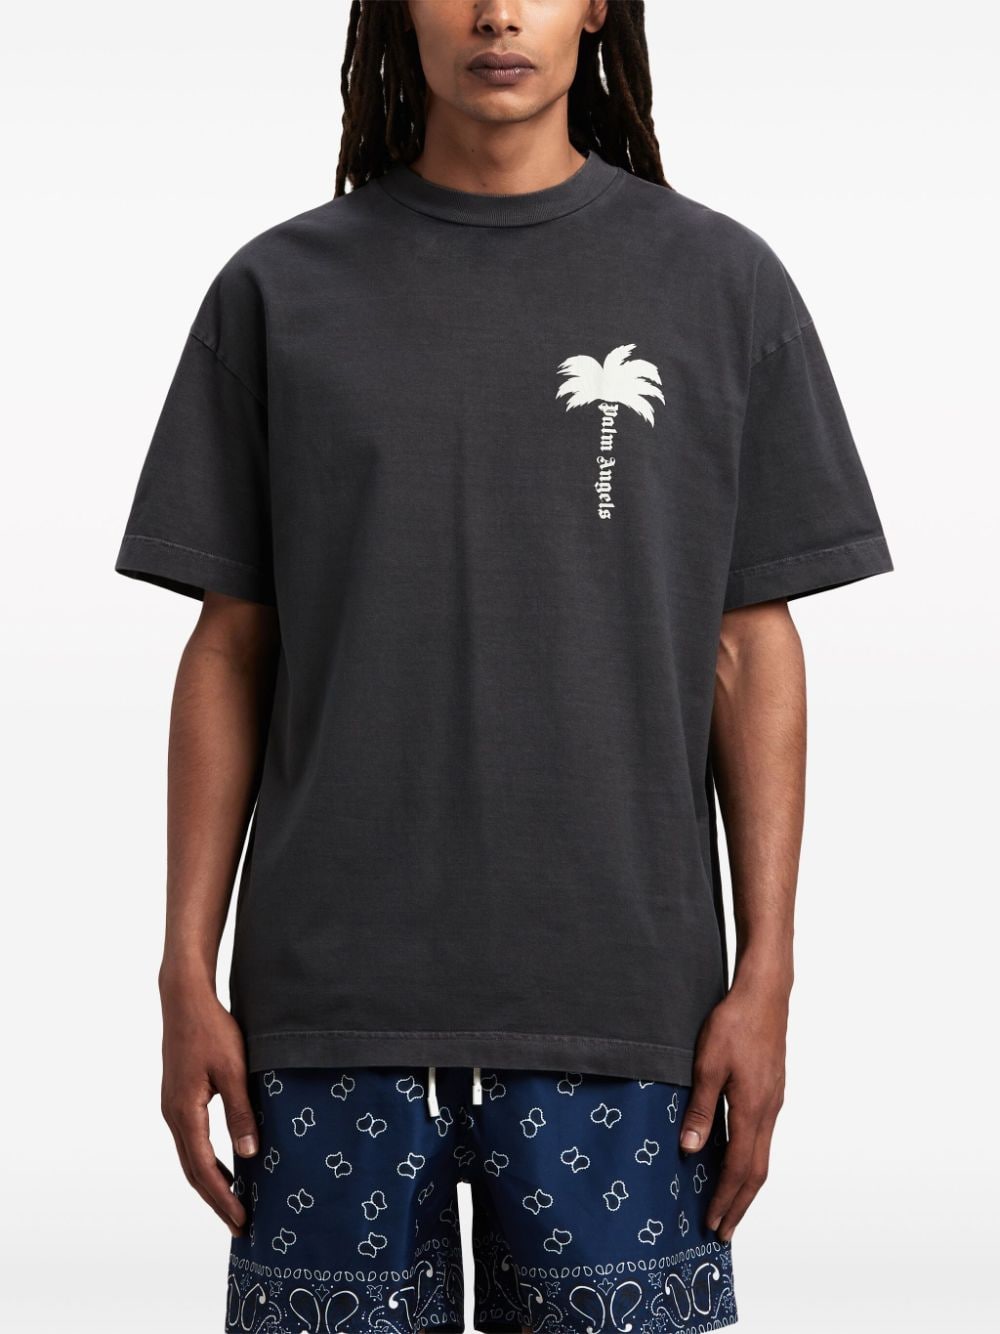 Gray palm tree logo t-shirt